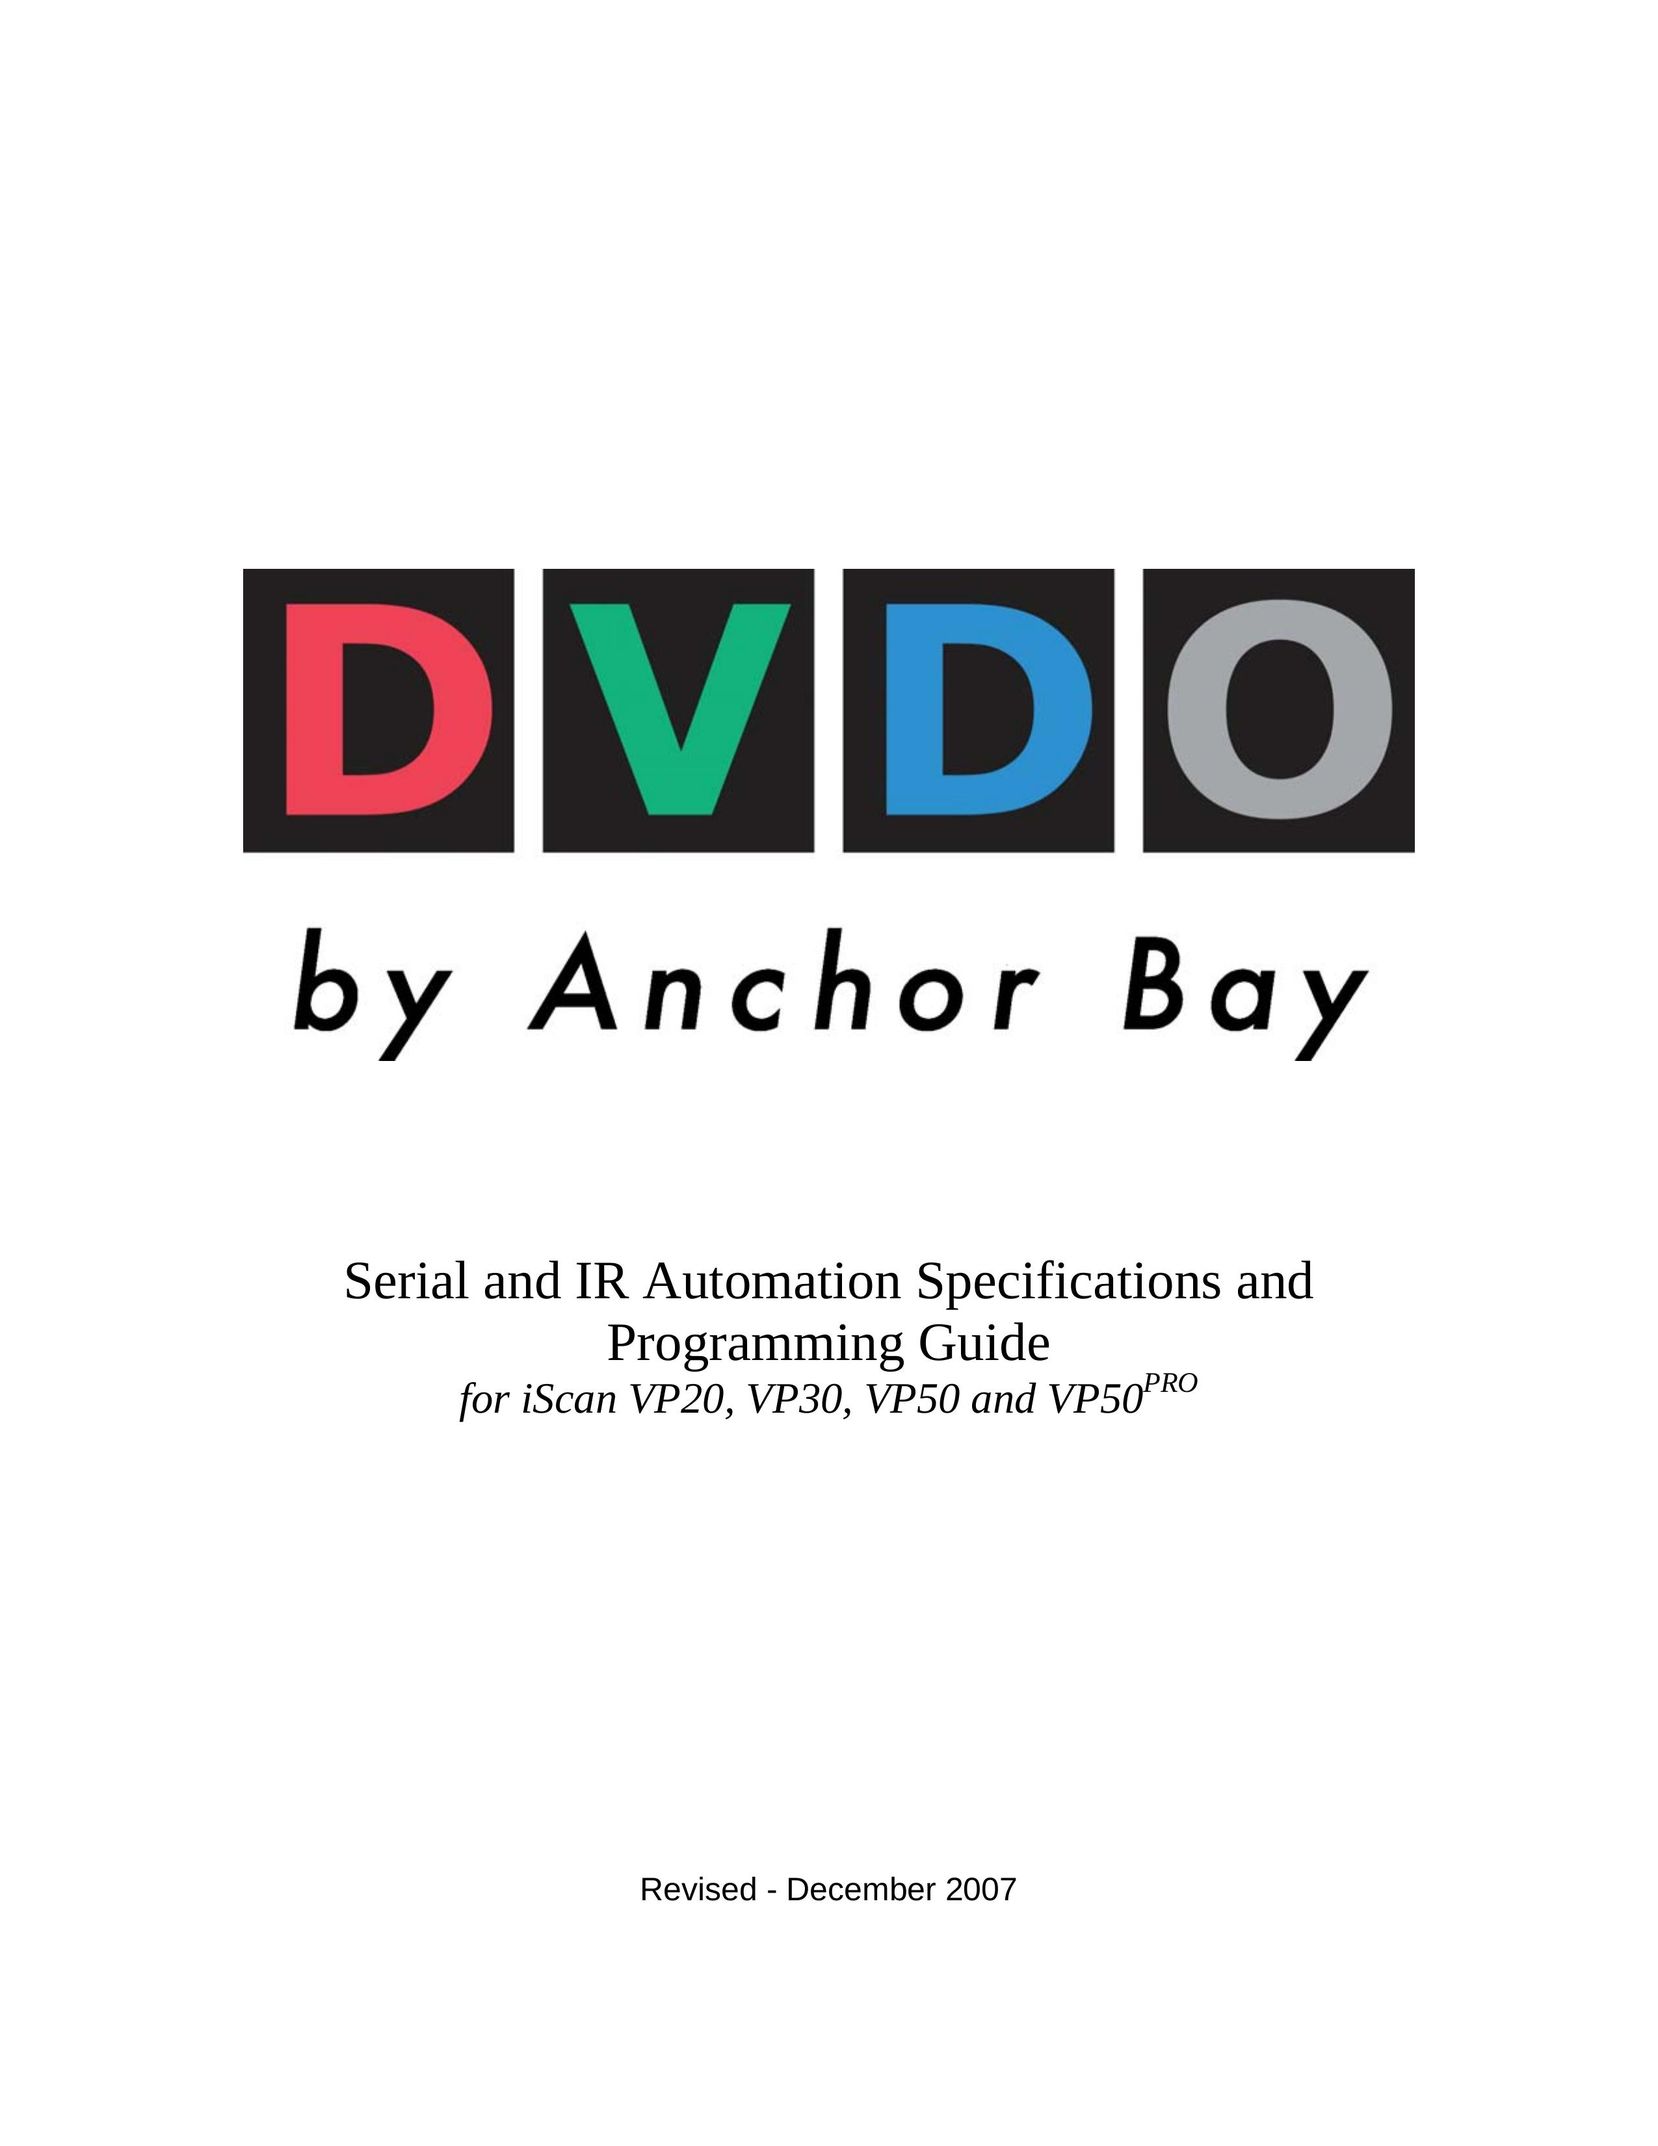 DVDO VP20 TV Video Accessories User Manual